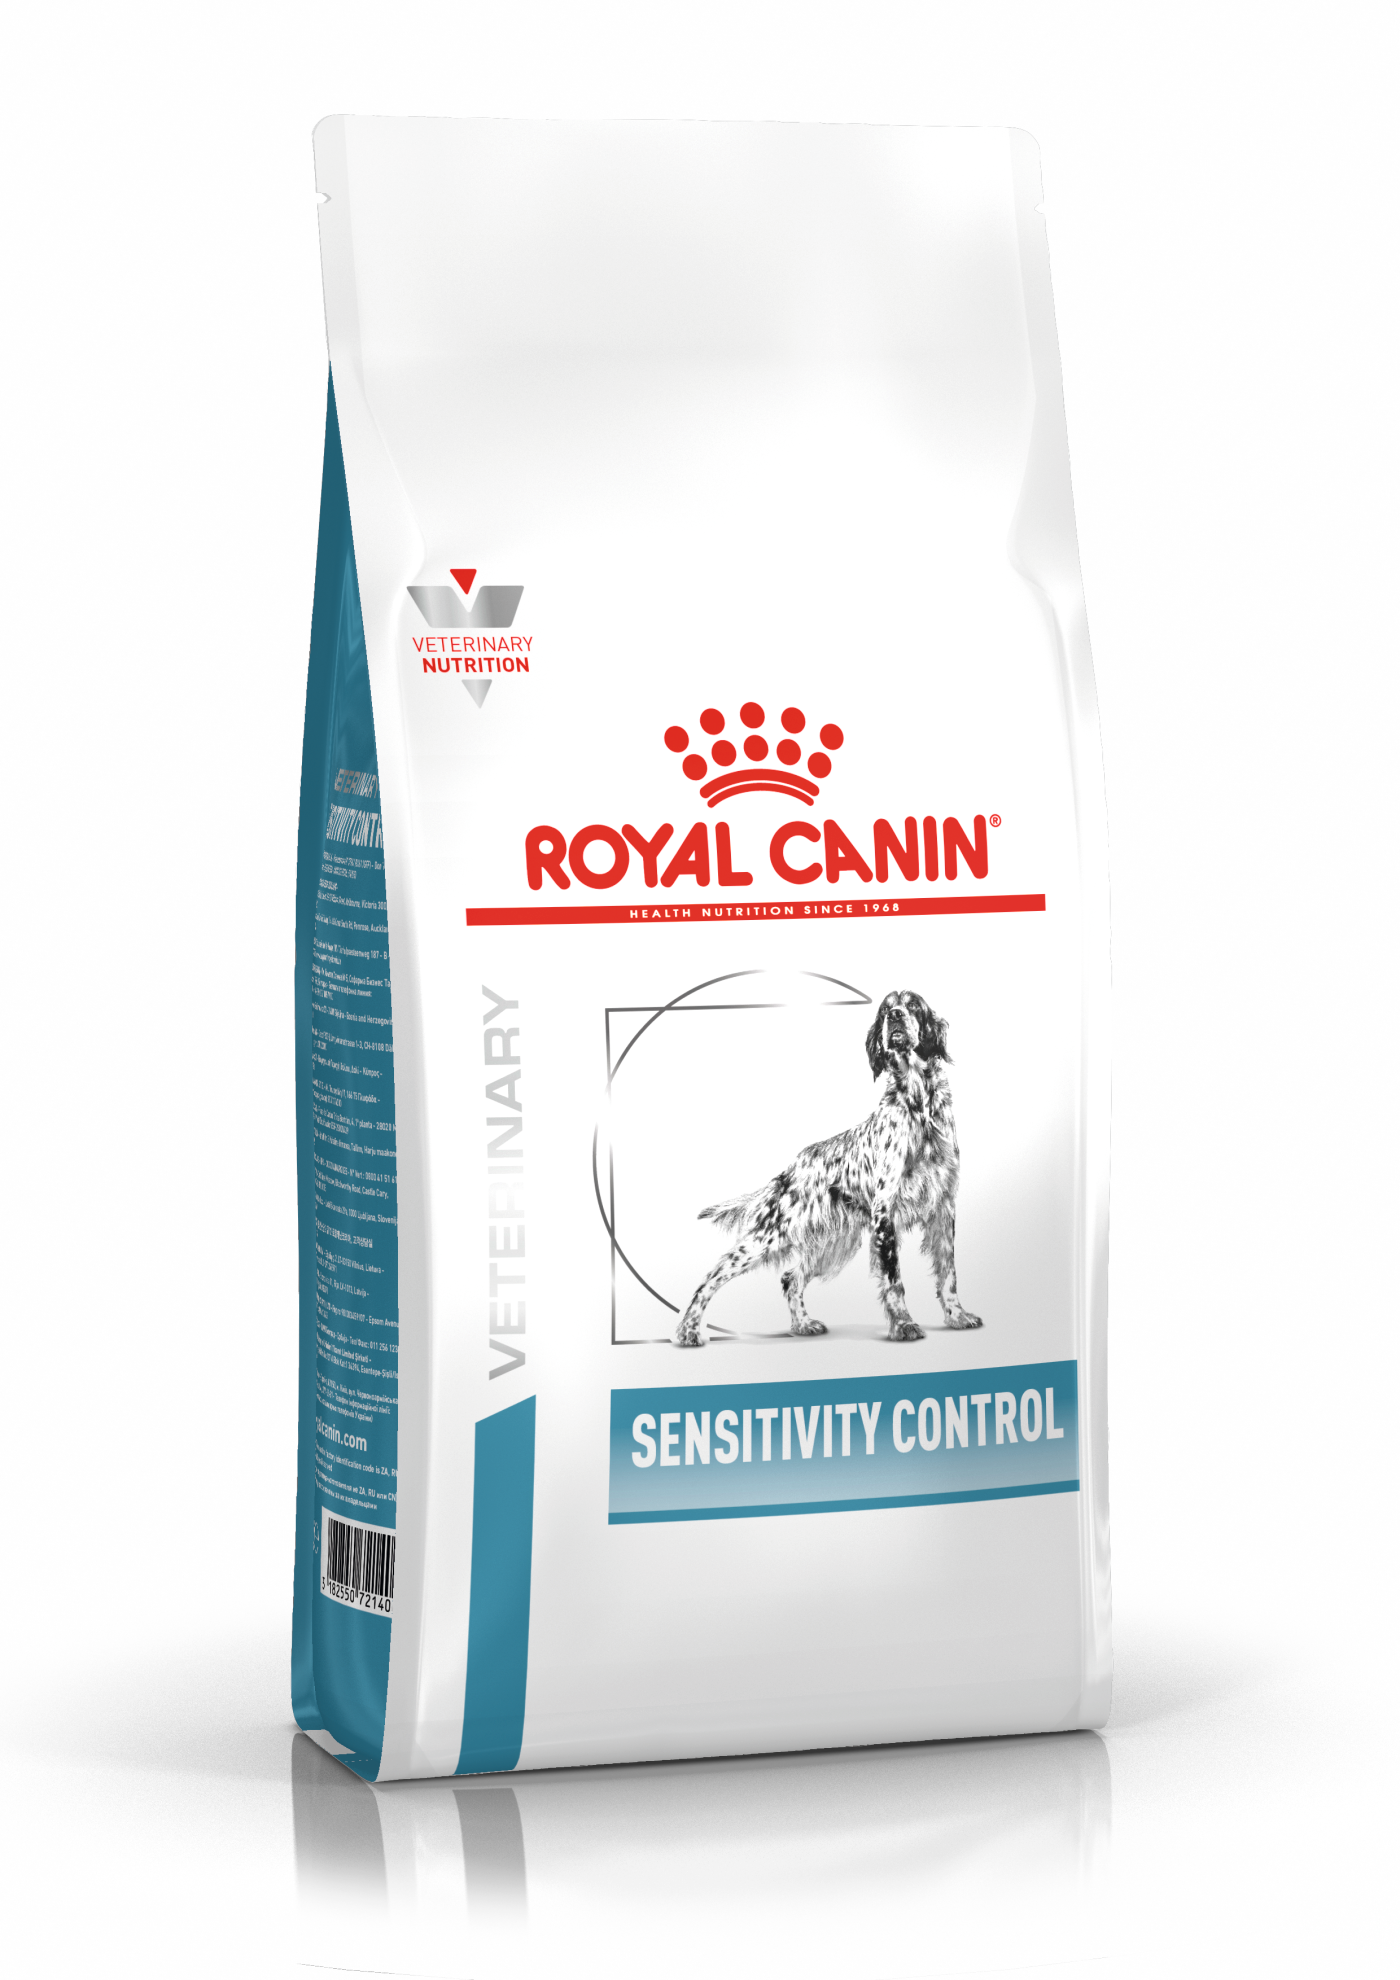 Royal Canin Sensitivity Control hond 1 x 1,5 kg